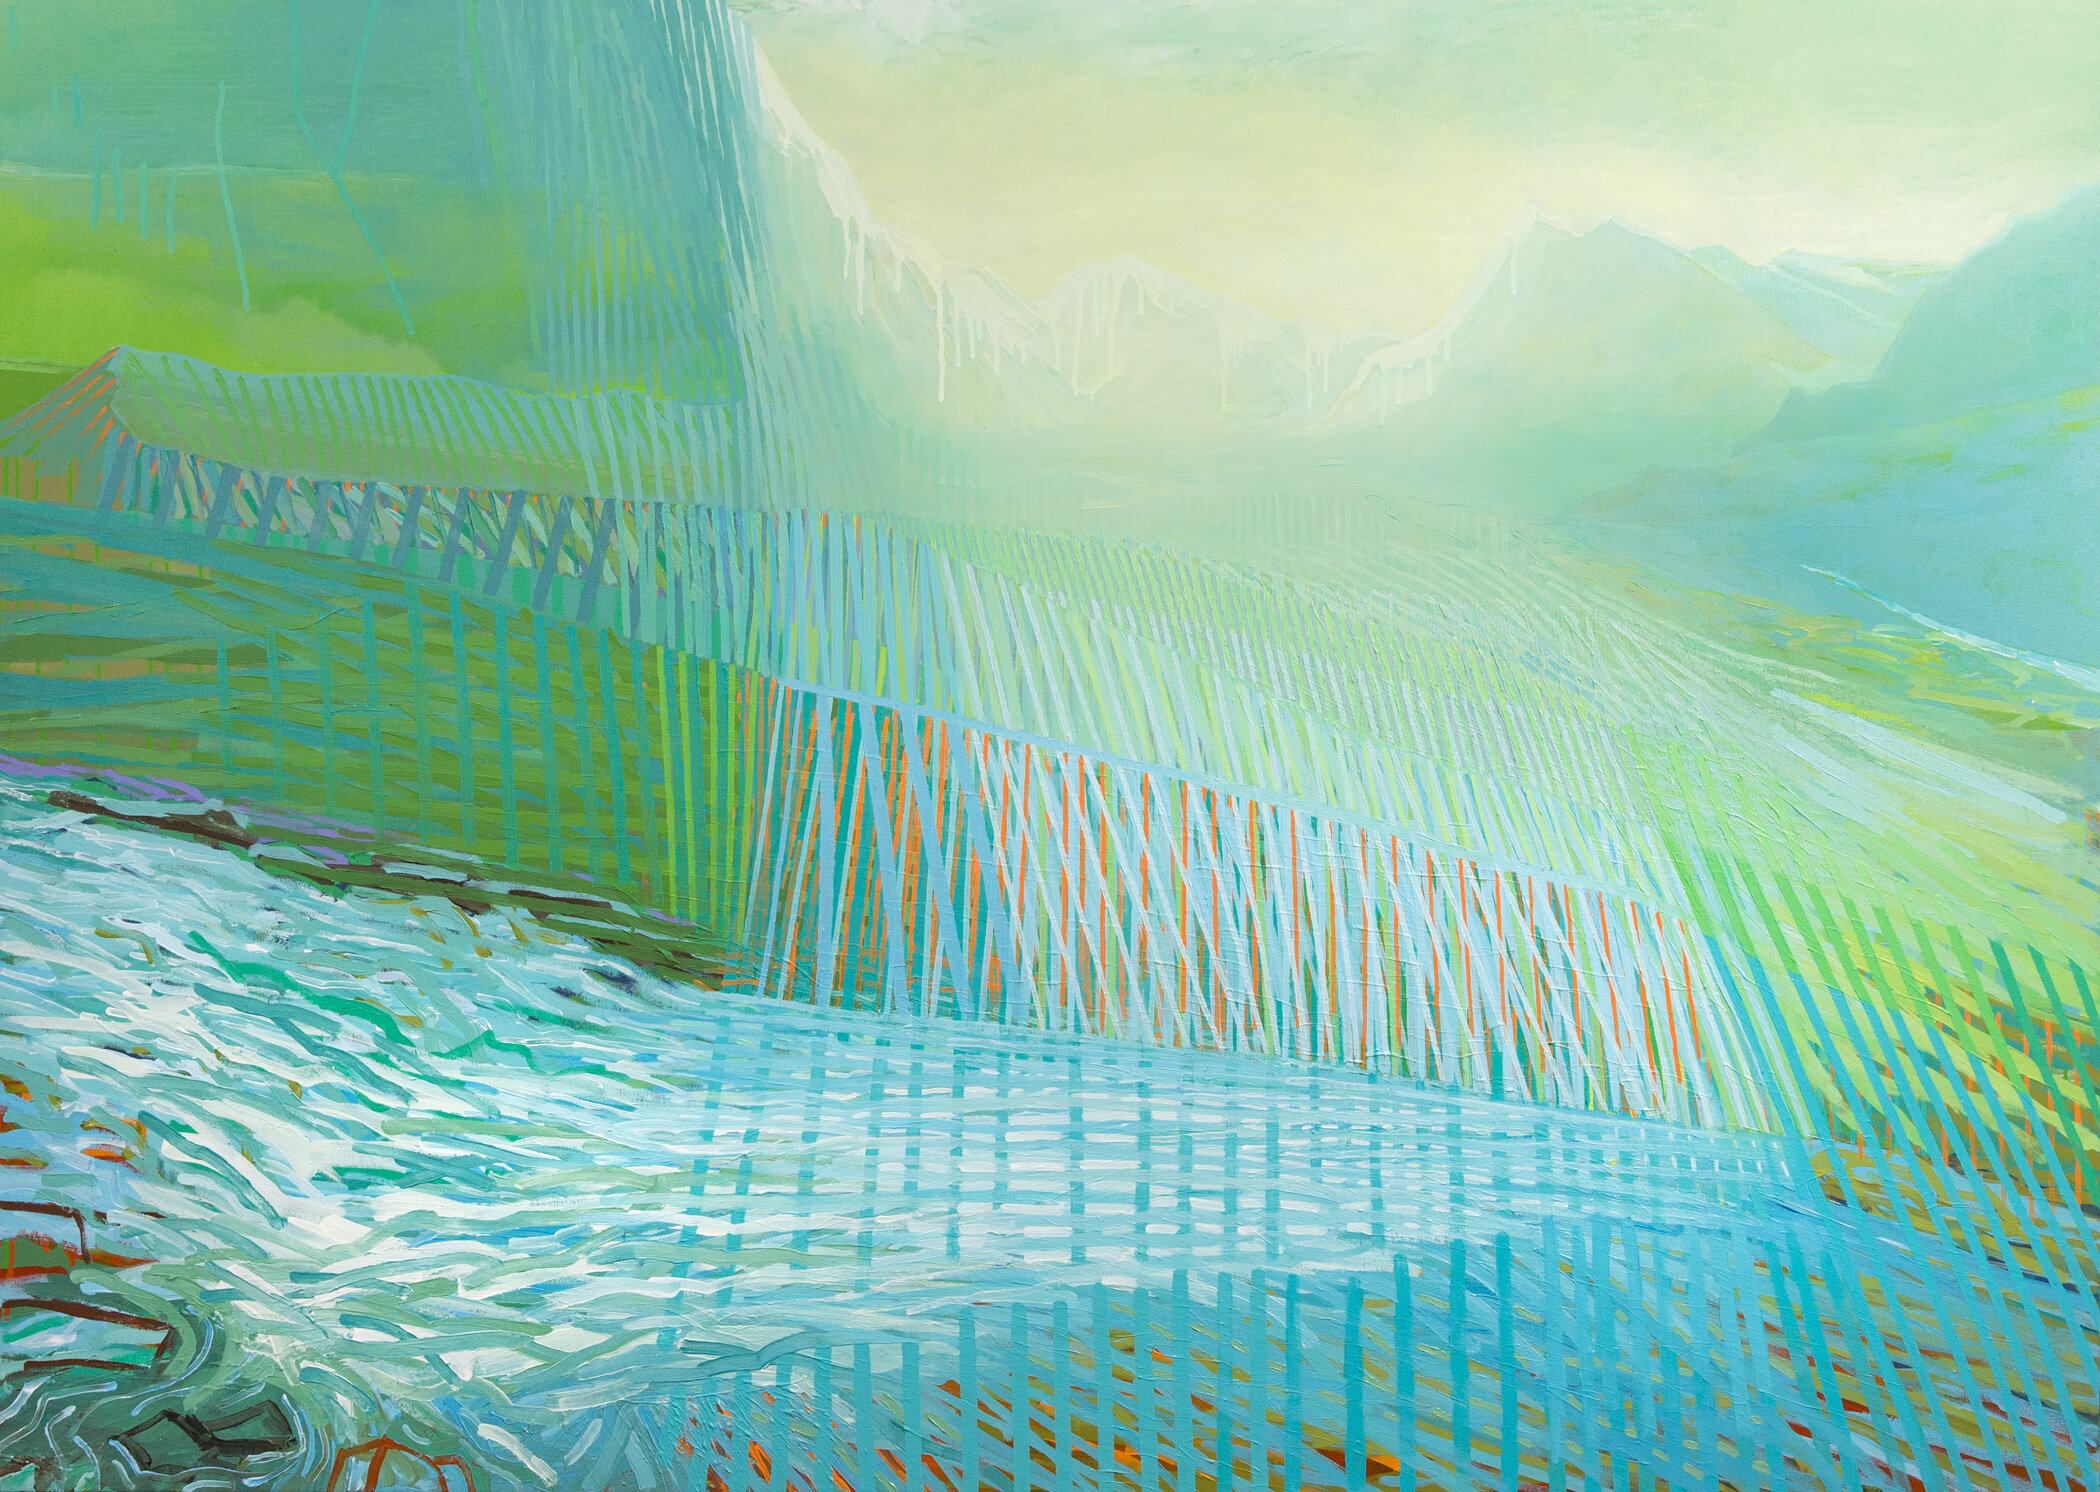 Deborah Hamon, The Longing, 2020, Acrylic on canvas, 50 x 70”